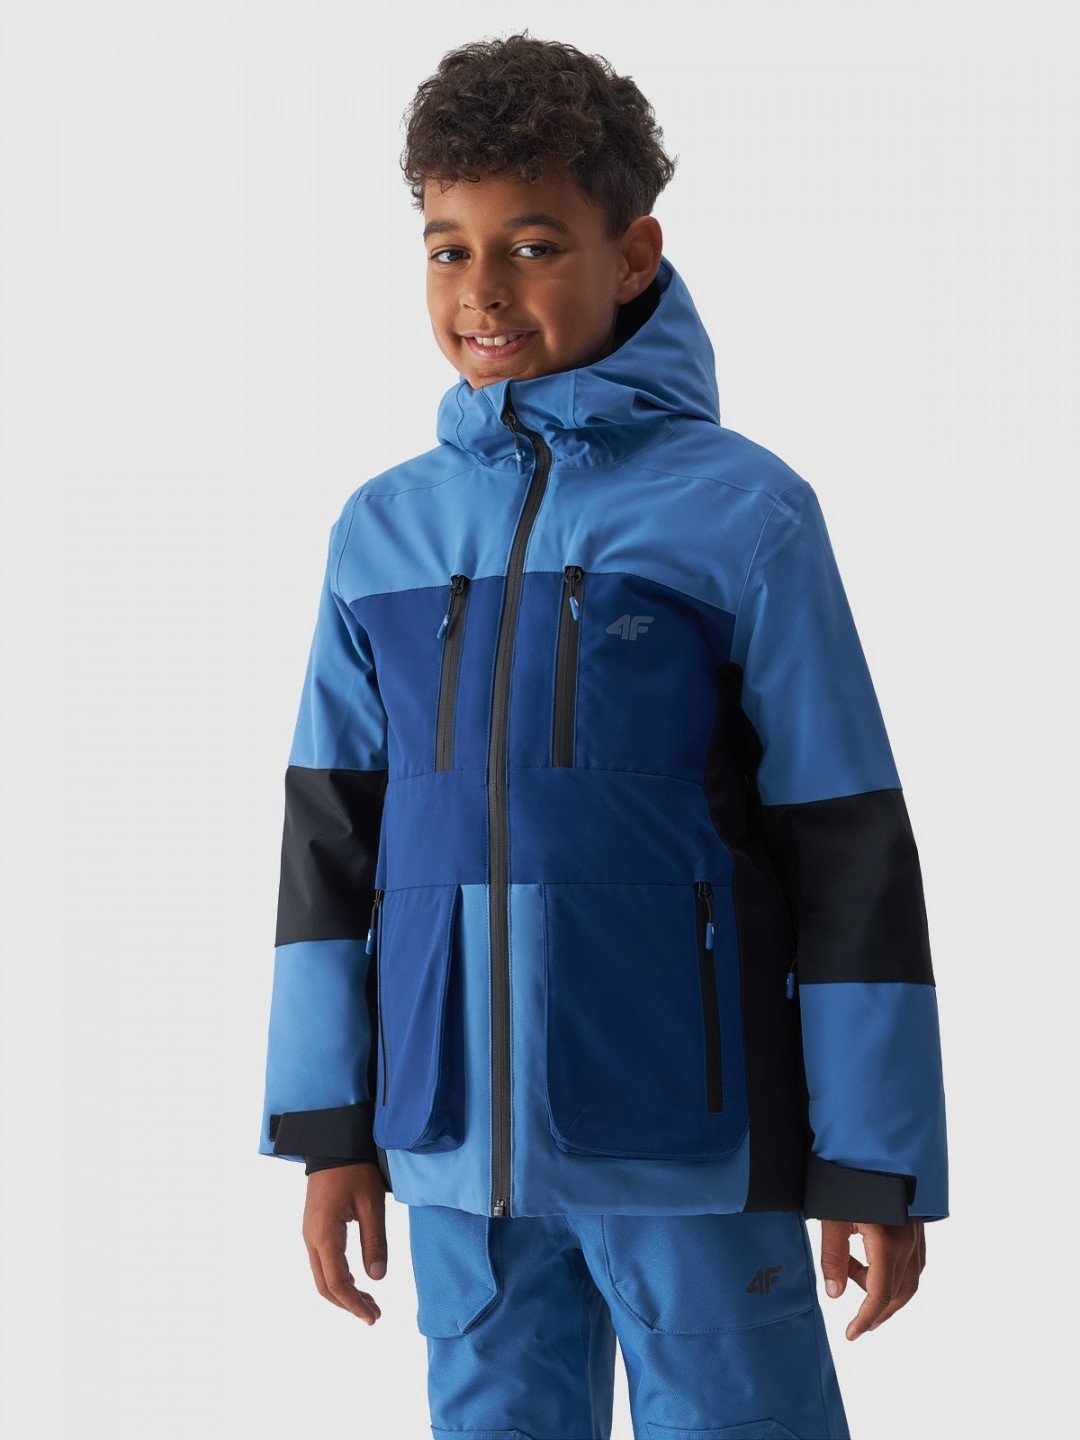 Chlapecká lyžařská bunda membrána 10000 – modrá